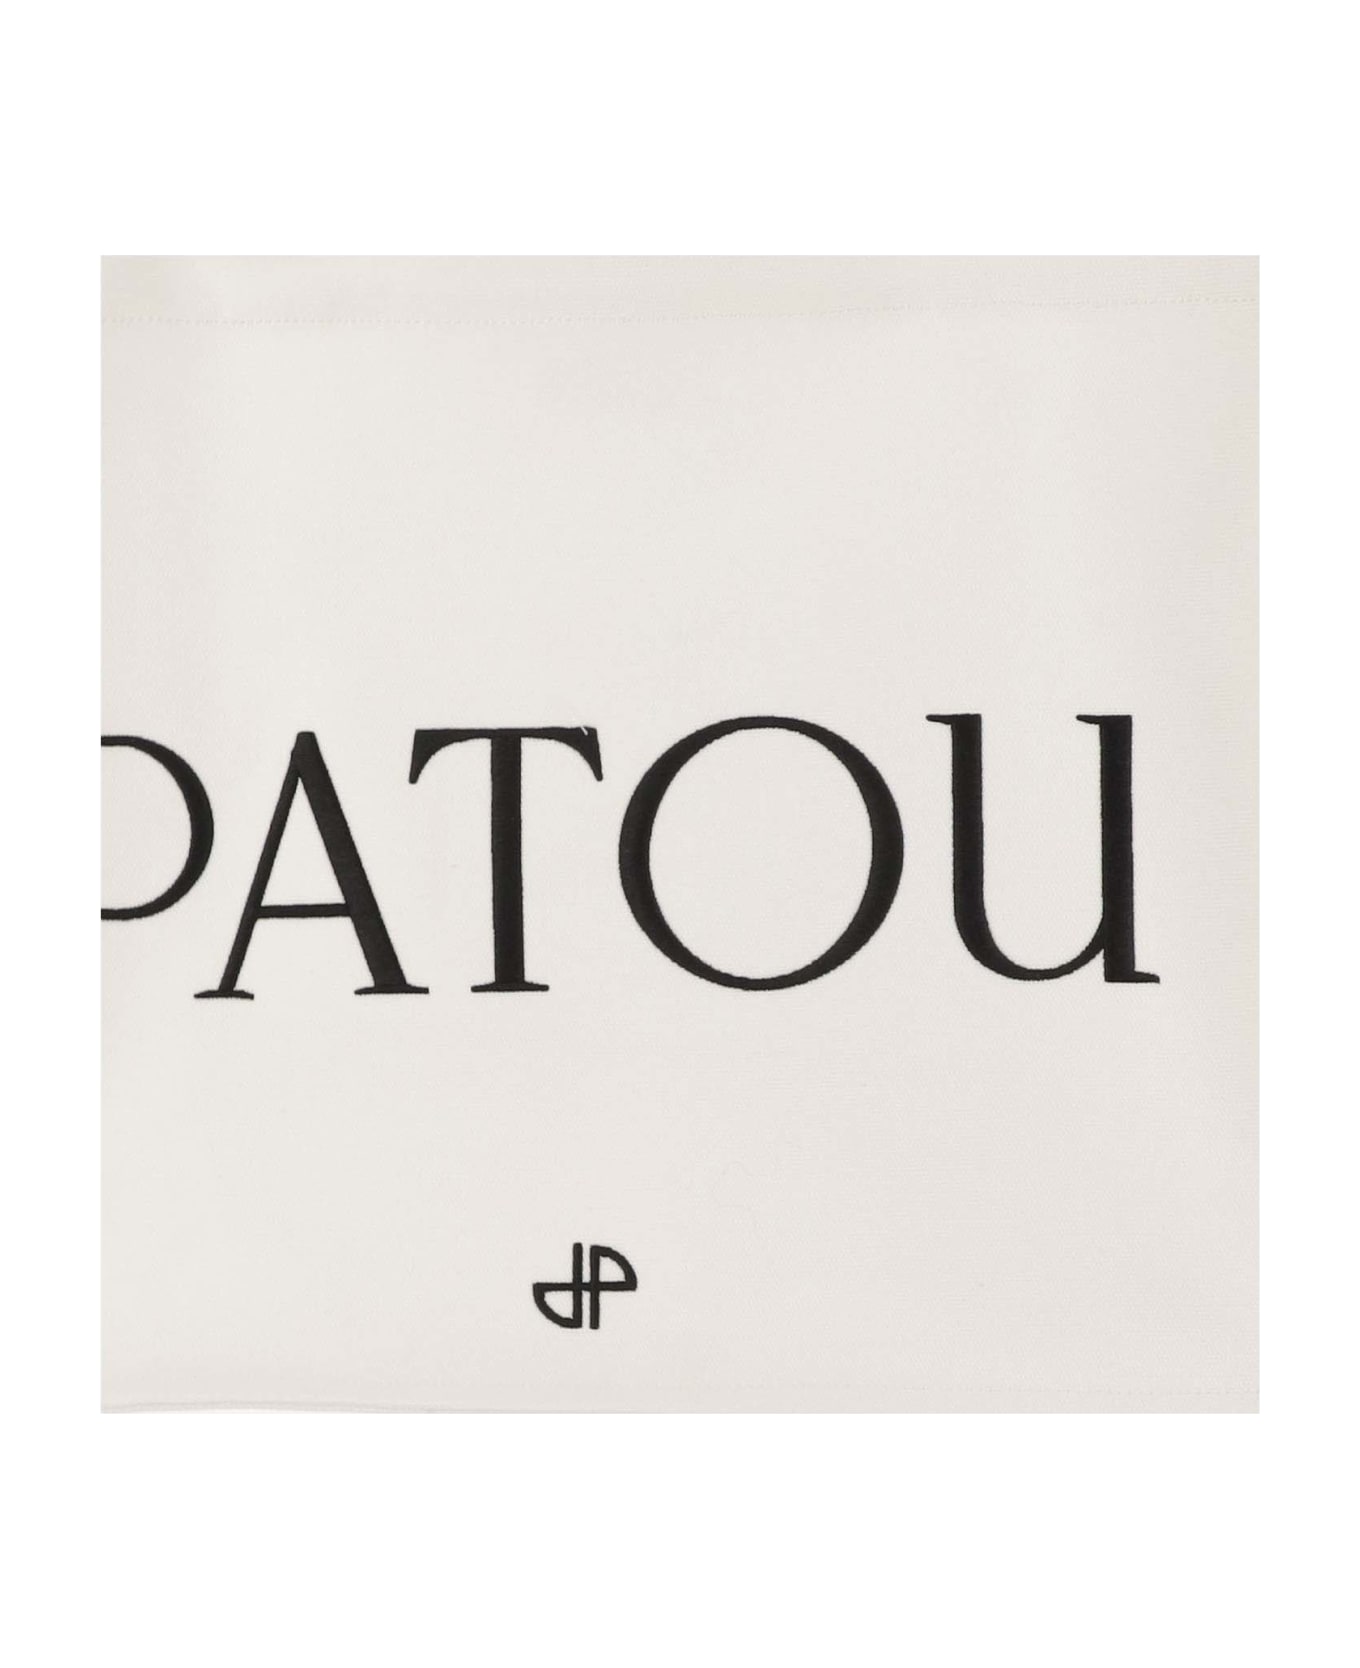 Patou Large Cotton Canvas Tote Bag - White トートバッグ